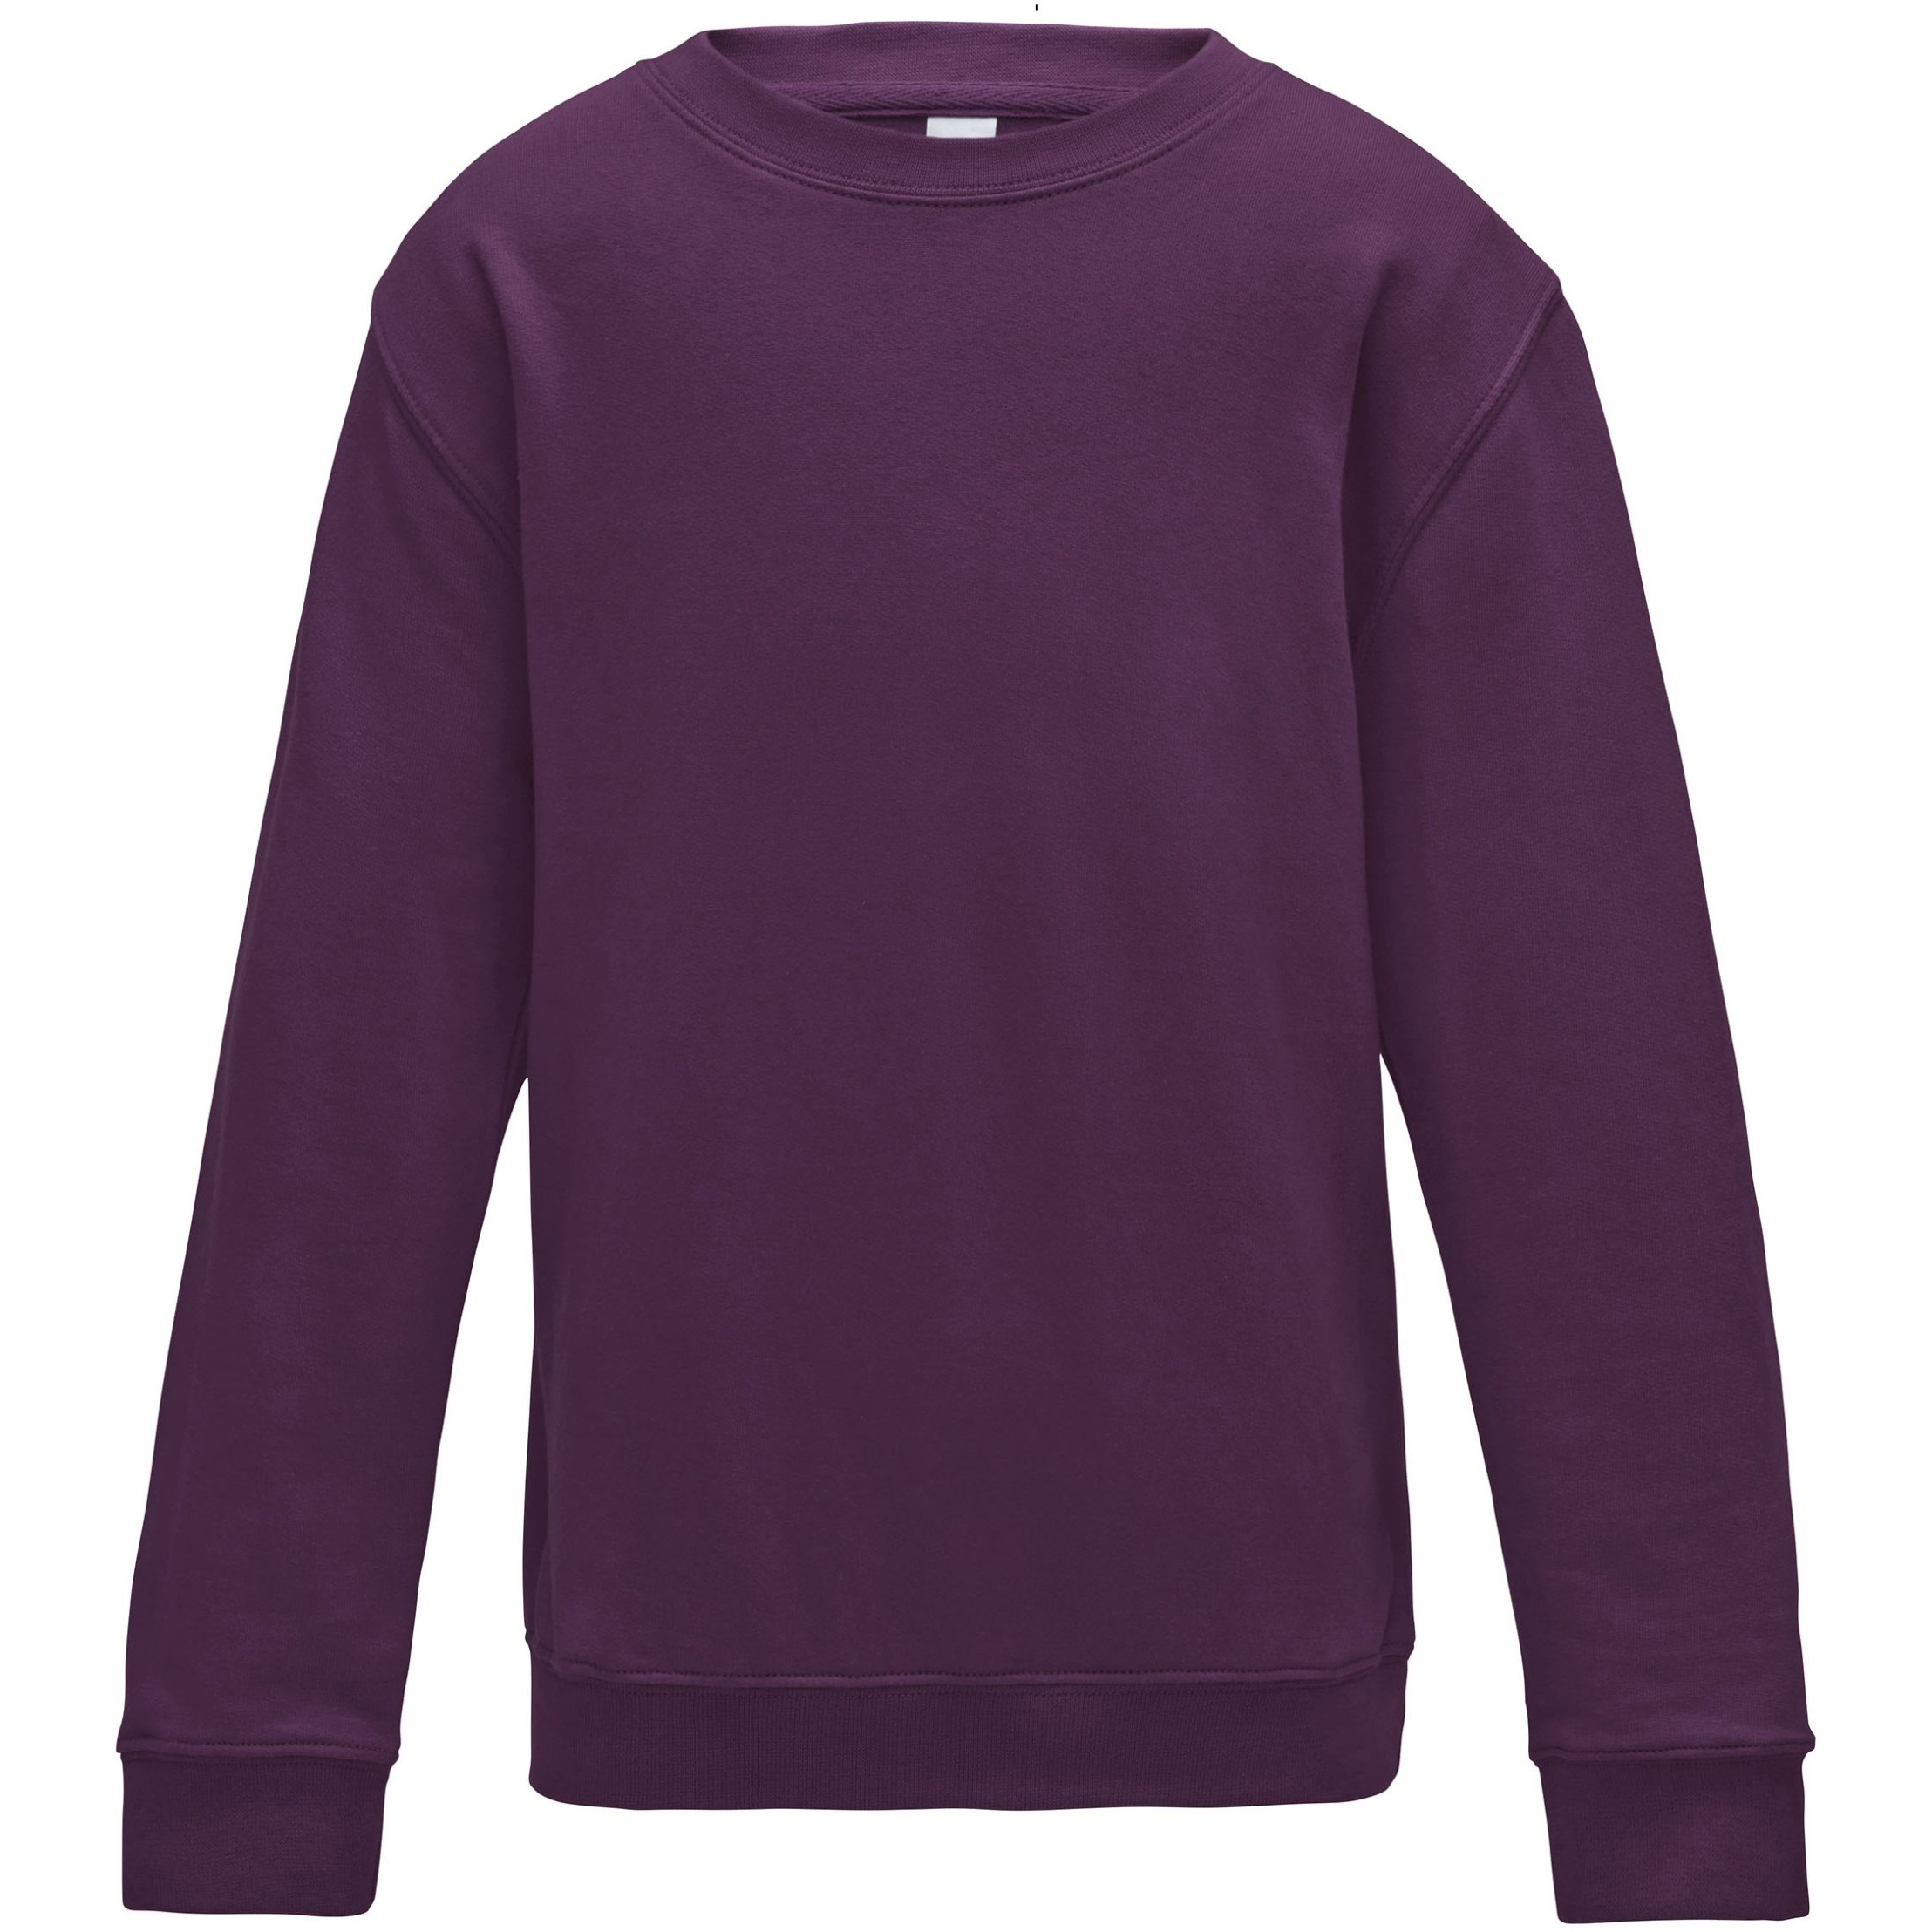 Plain Casual Sweatshirts